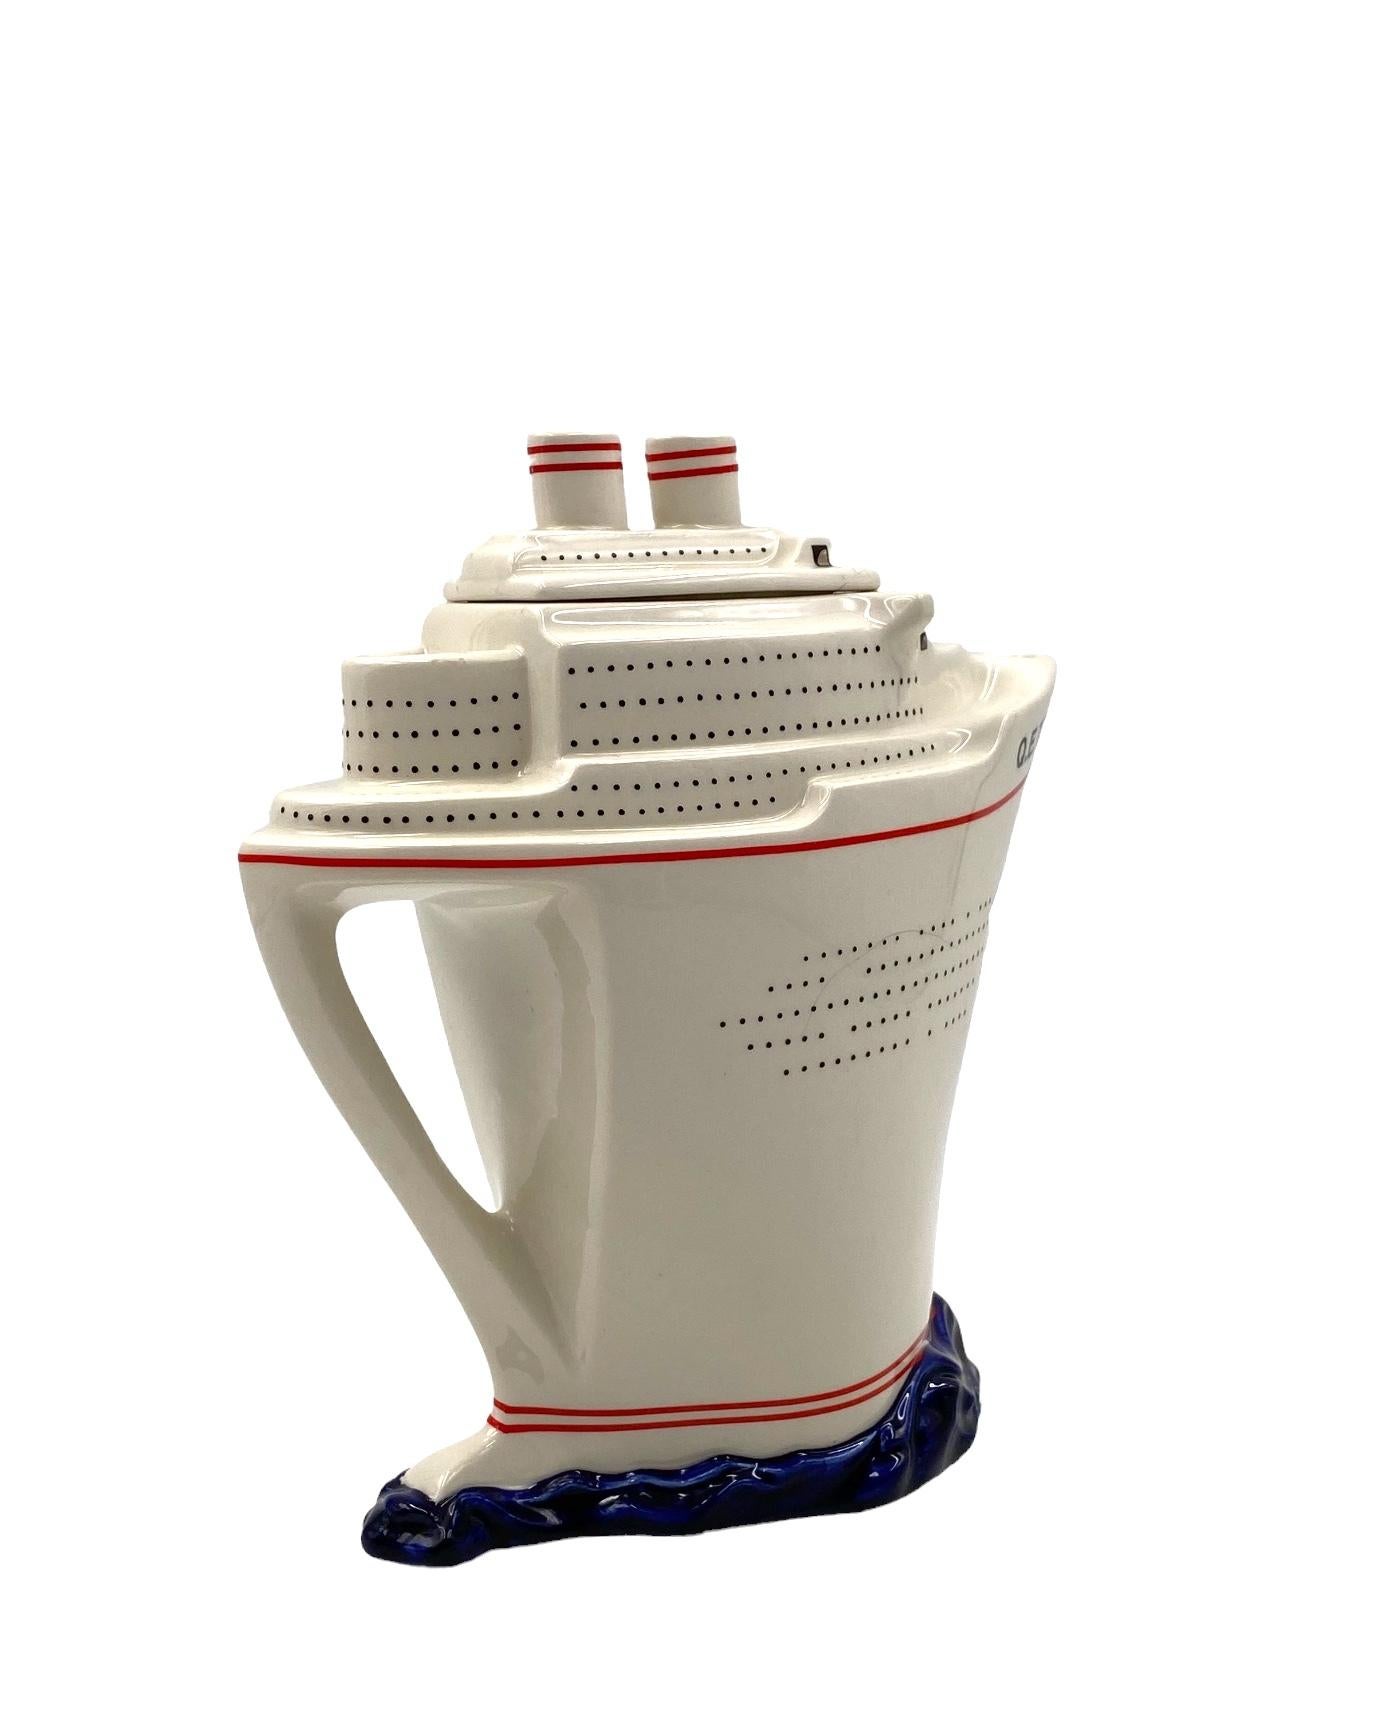 Queen Elizabeth II Cruise Ship Teapot, Paul Cardew, UK, 2000s For Sale 10